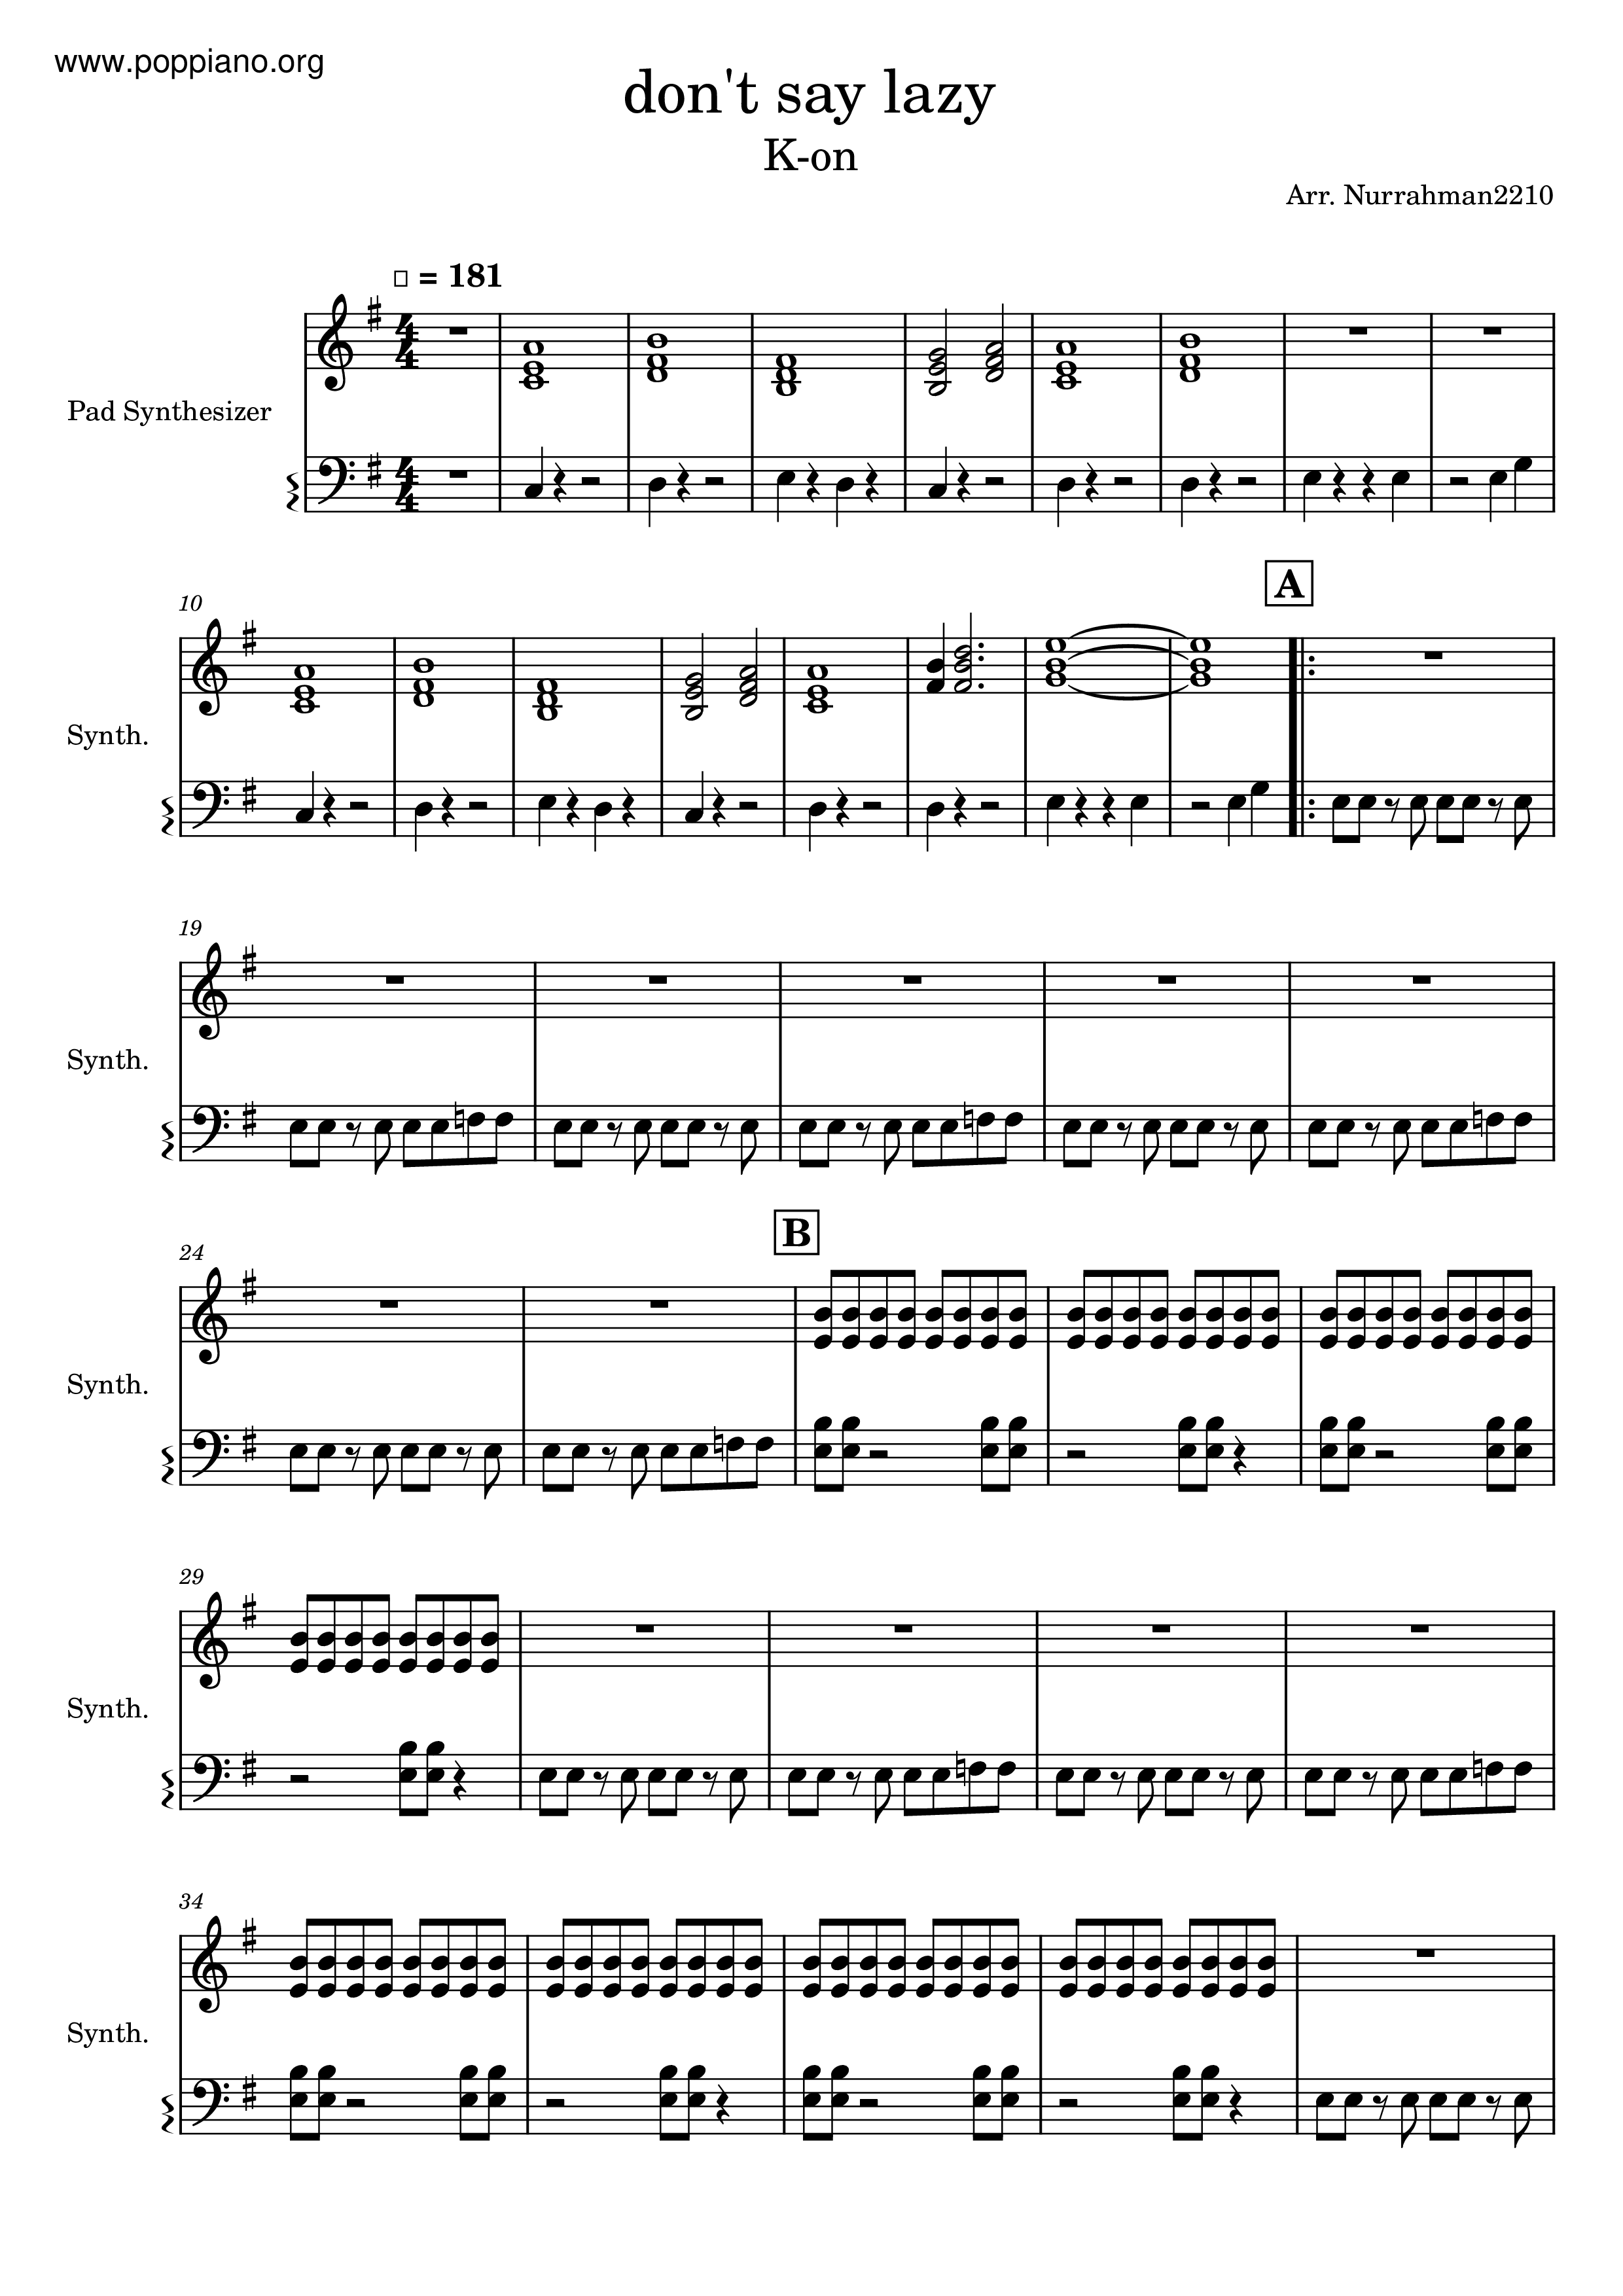 ☆K-On! - Don't Say Lazy ピアノ譜pdf- 香港ポップピアノ協会 無料PDF 